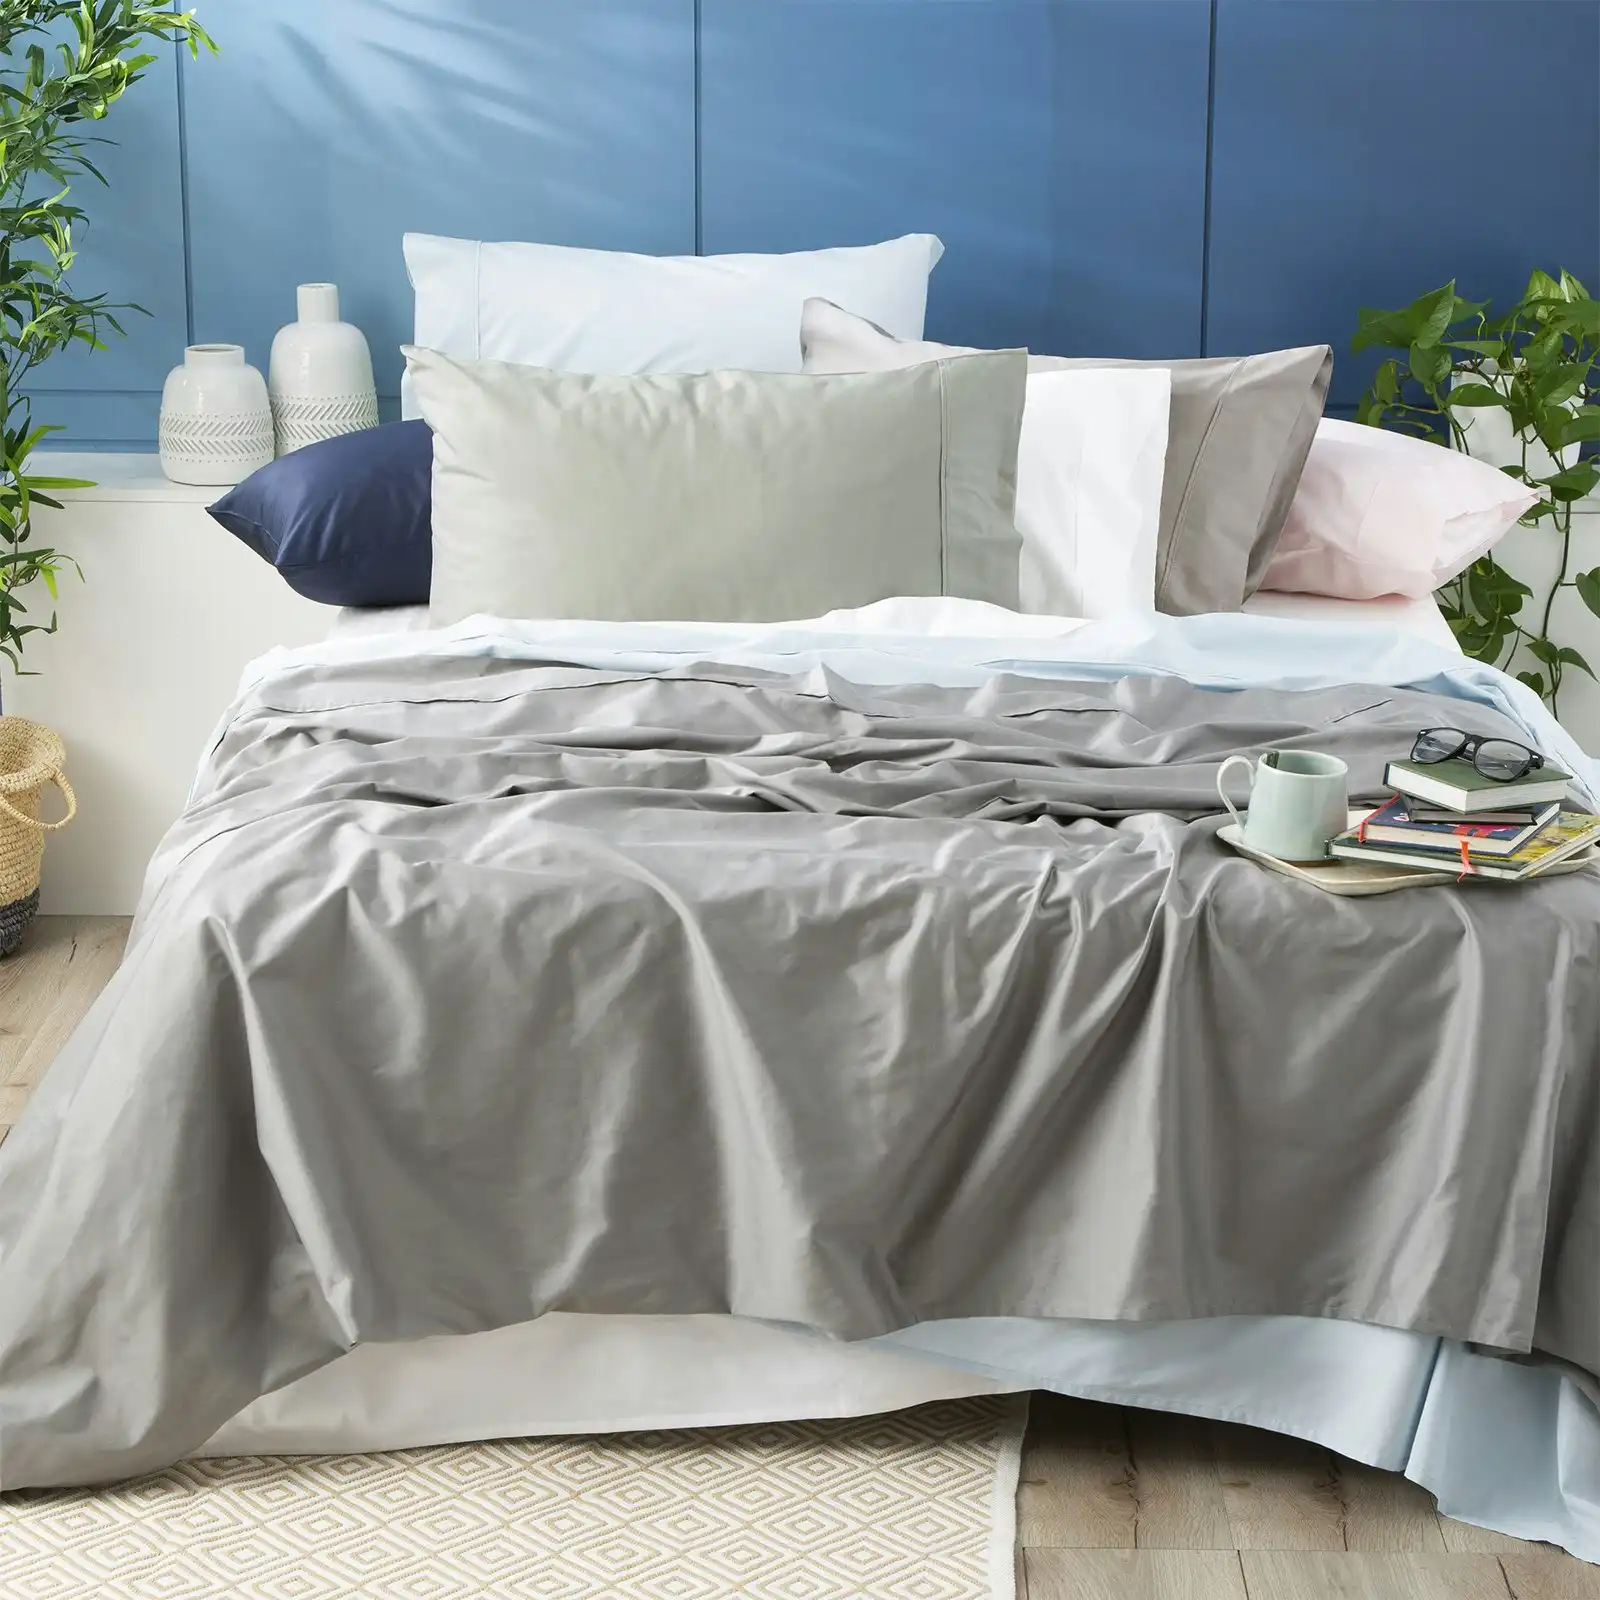 Park Avenue King Bed Sheet/Pillowcases Set 500TC Bamboo Cotton Home Bedding Dove